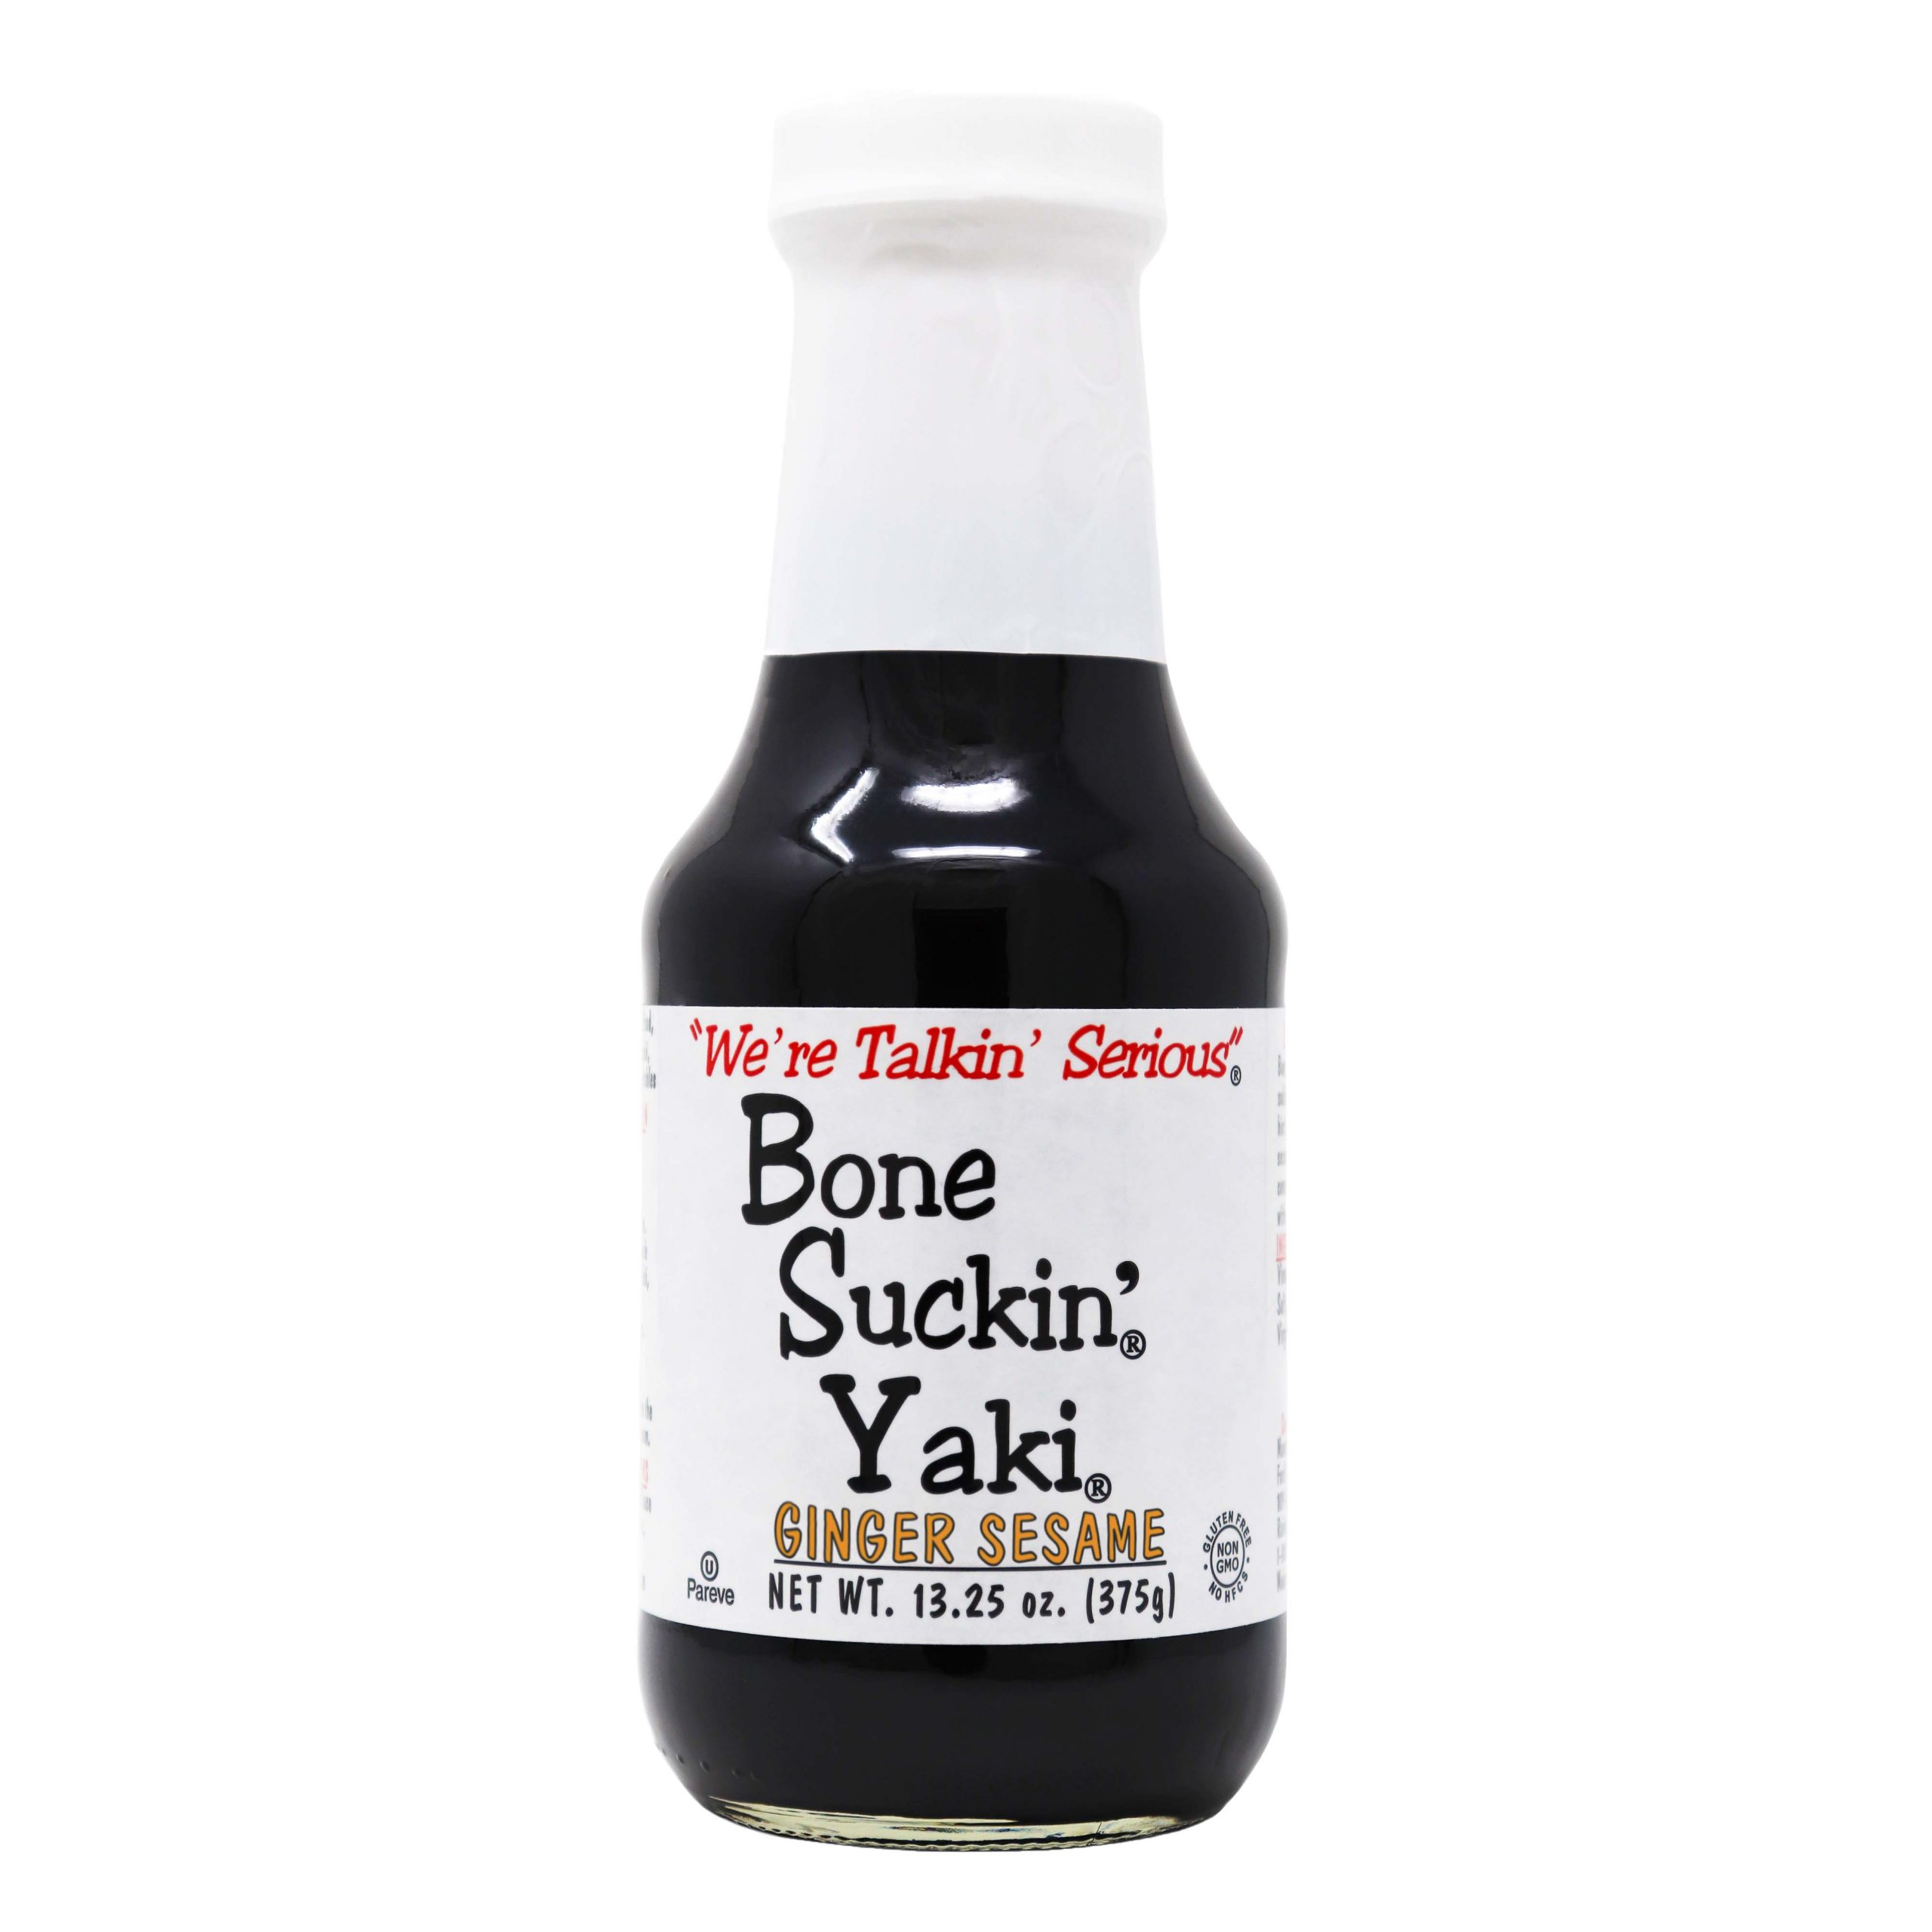 Bone Suckin' Yaki, Ginger Sesame, 13.25 oz. Bottle